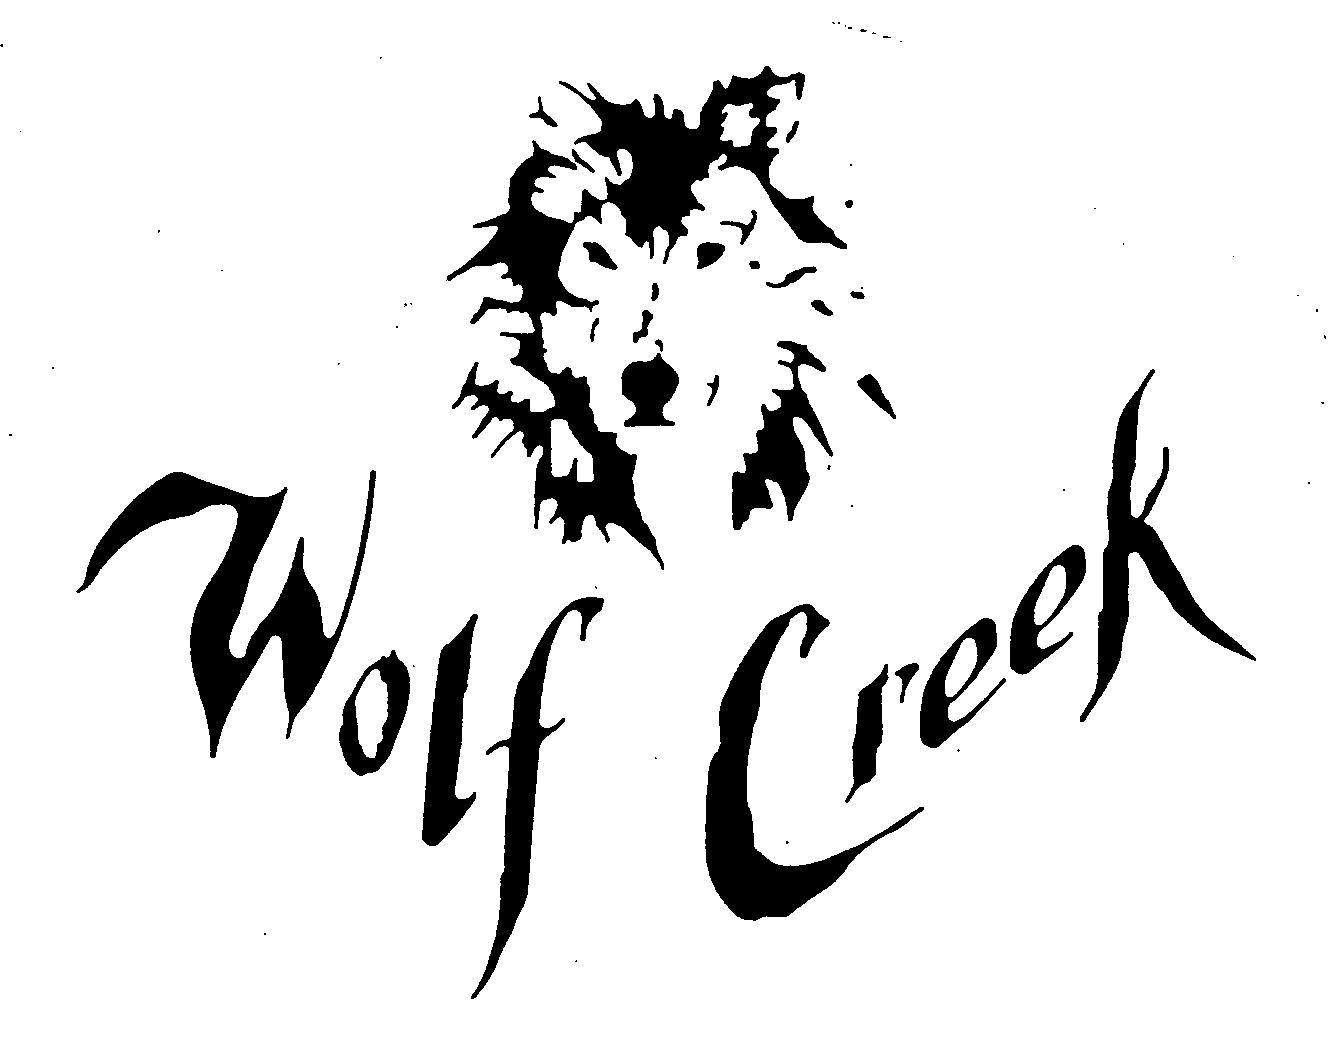 Trademark Logo WOLF CREEK